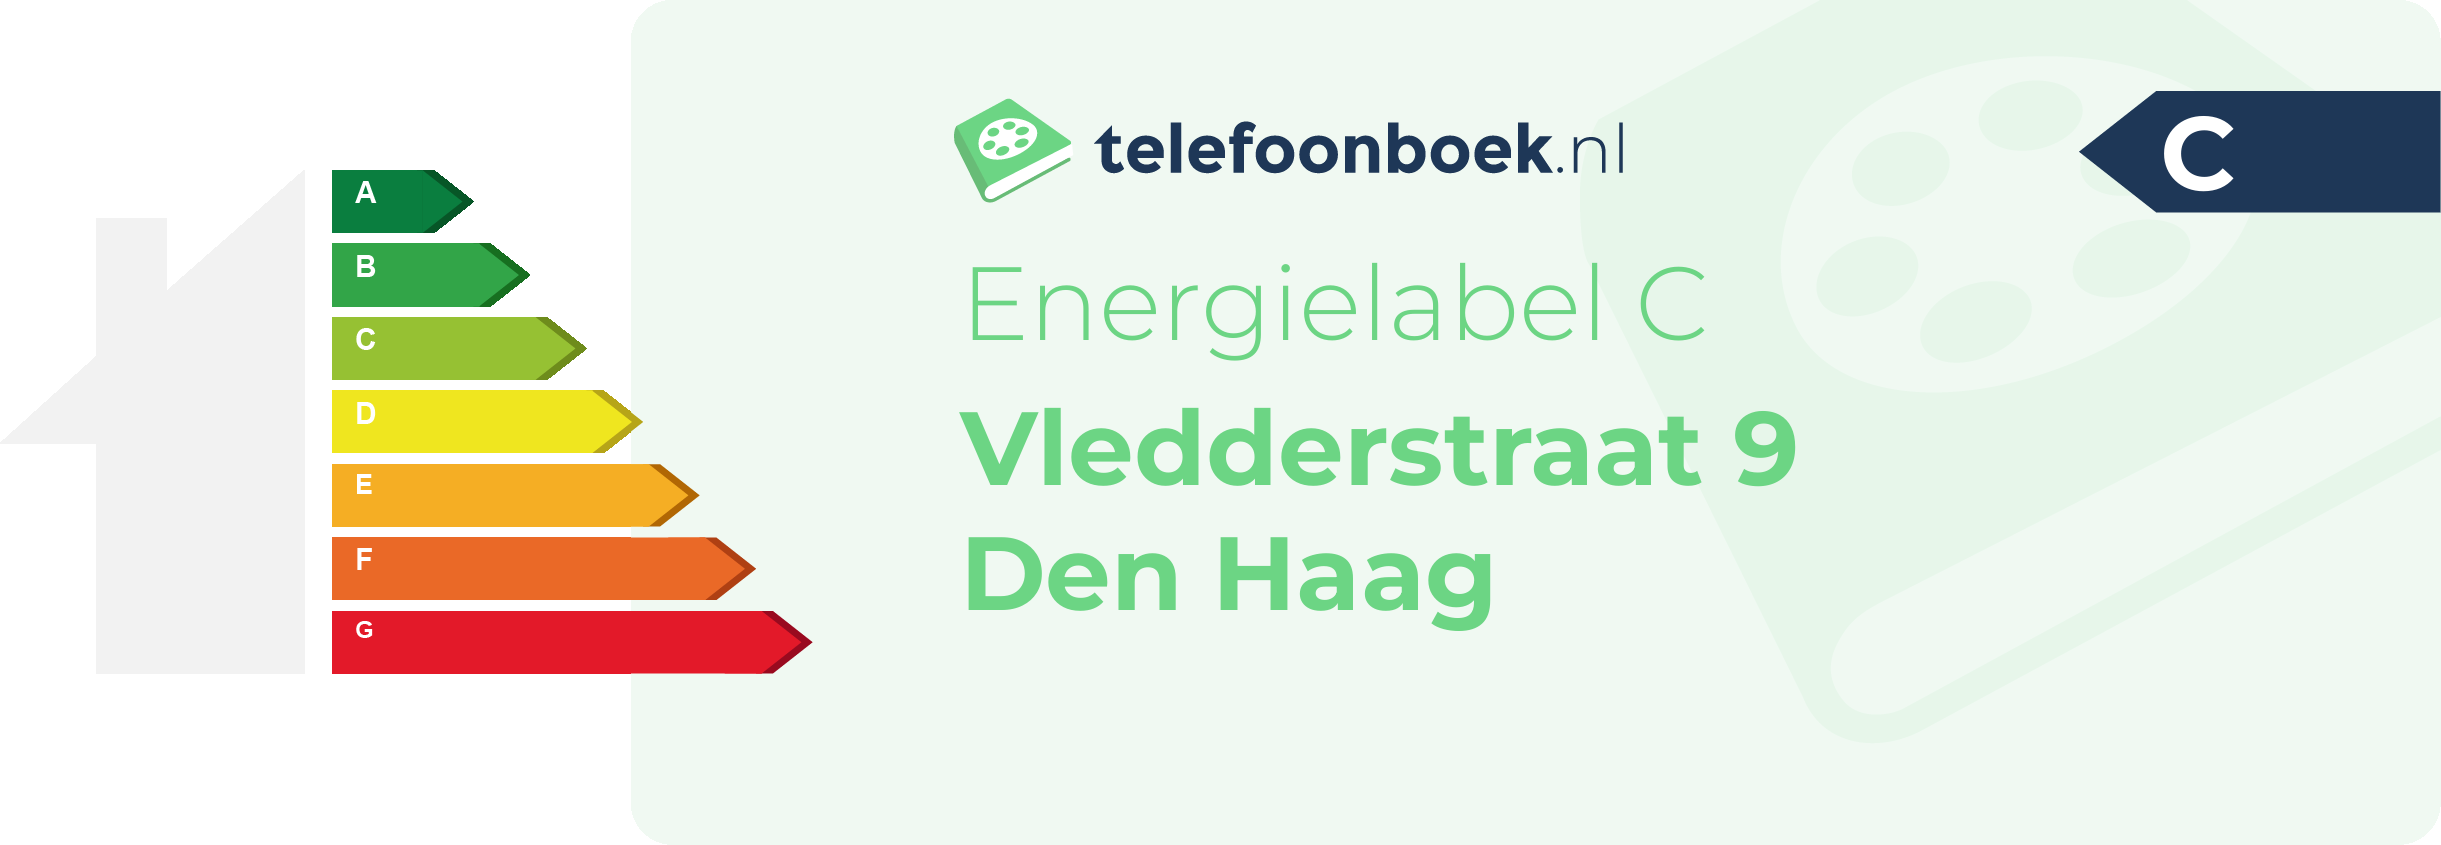 Energielabel Vledderstraat 9 Den Haag